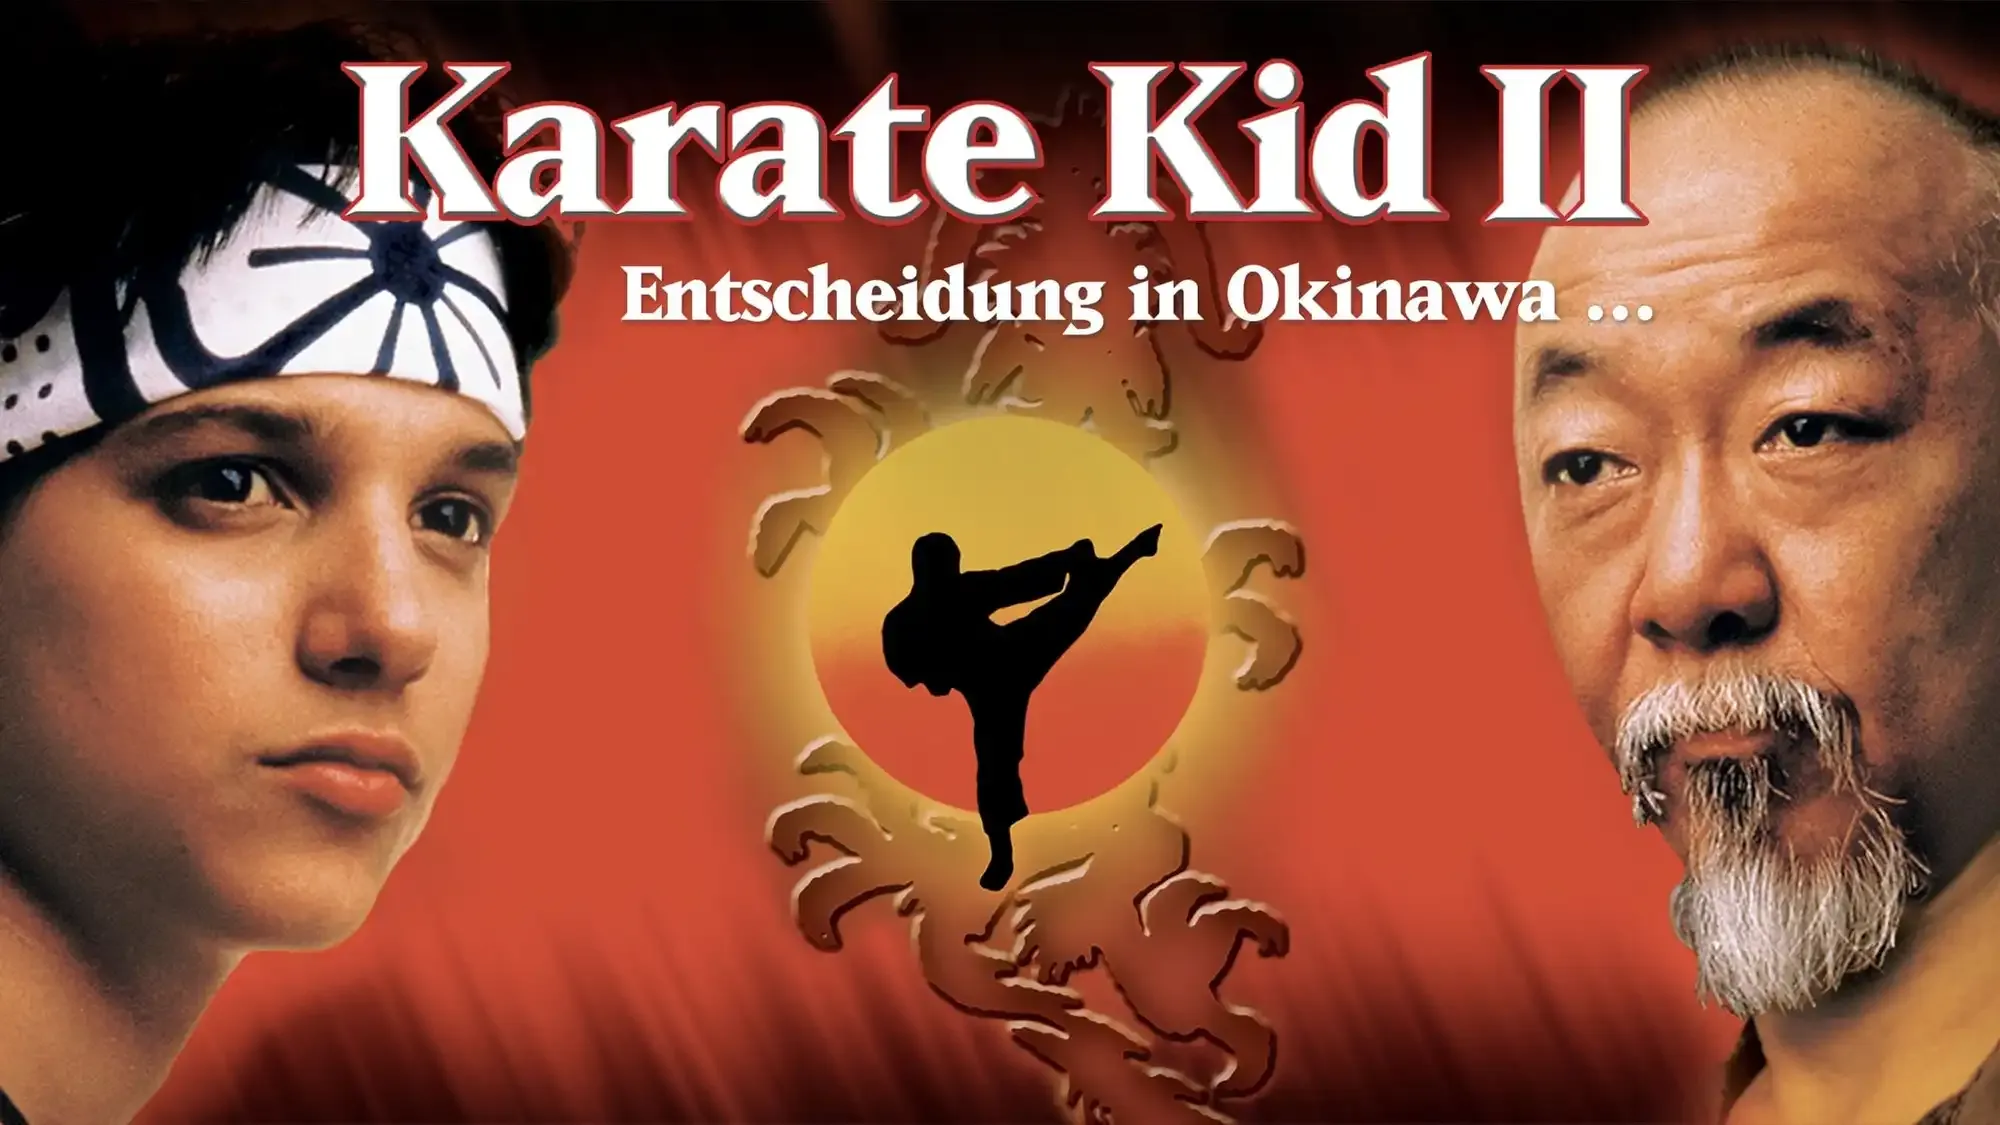 The Karate Kid Part II movie review